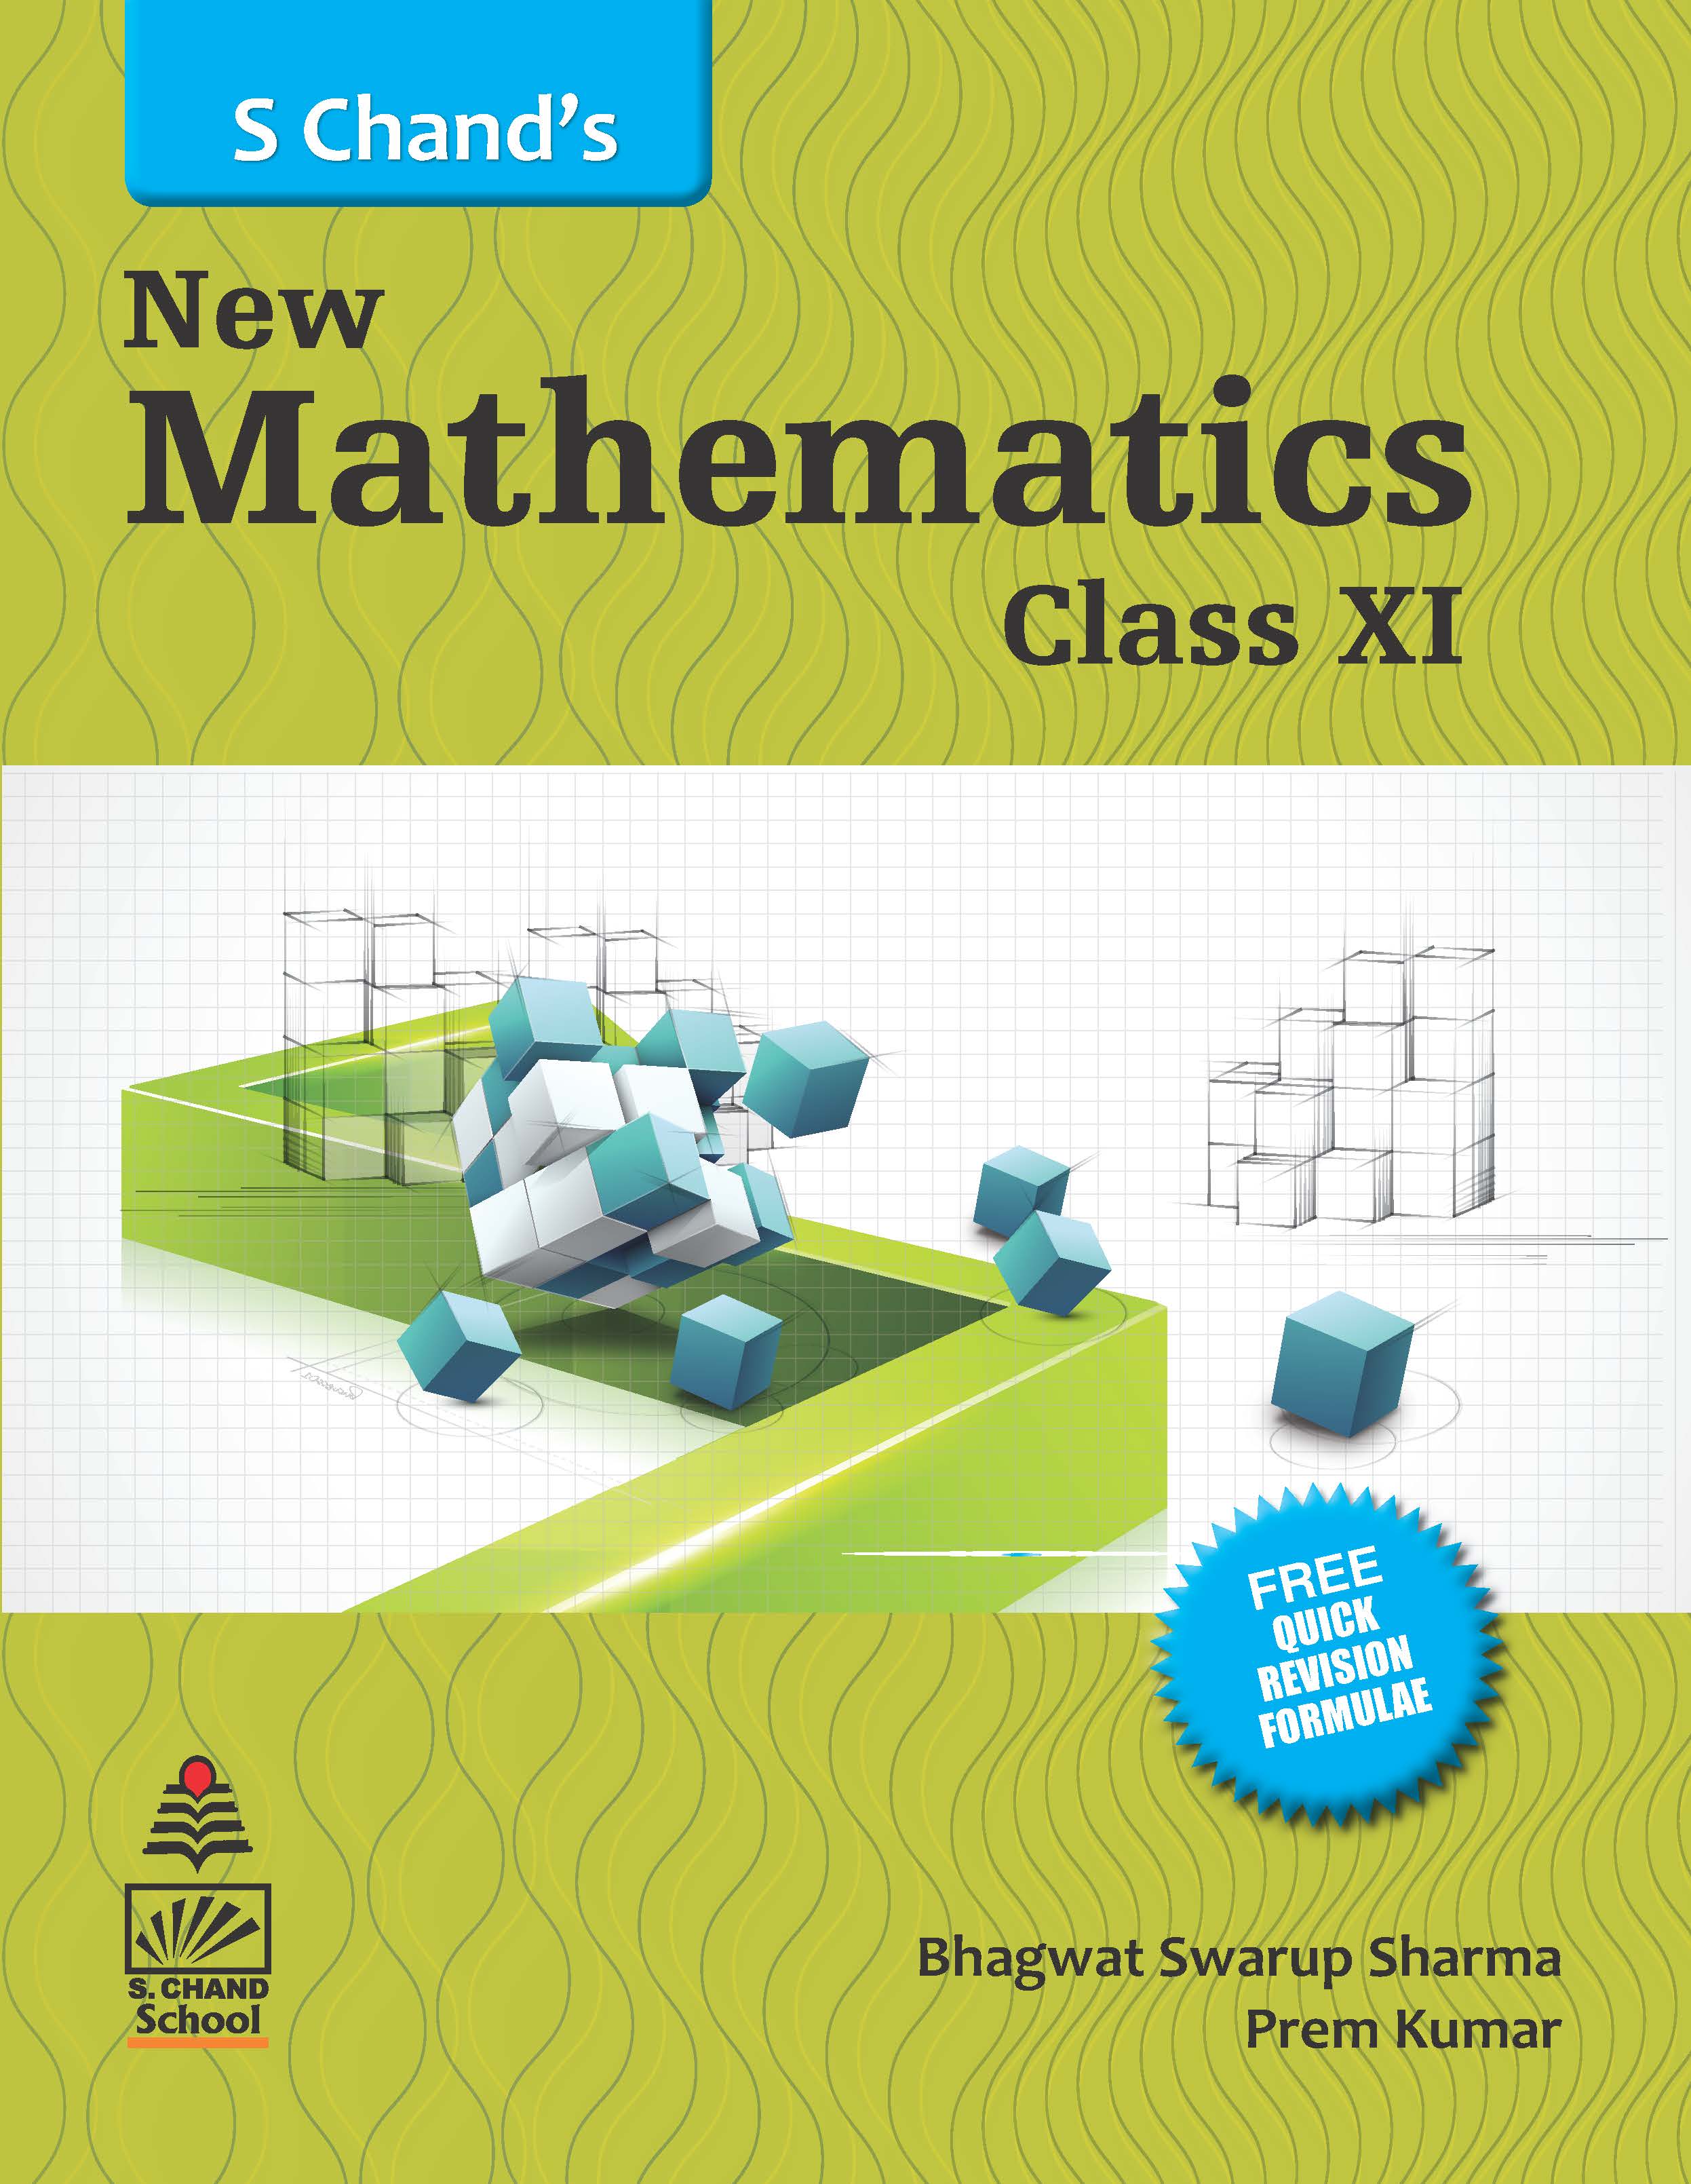 case study for class xi mathematics